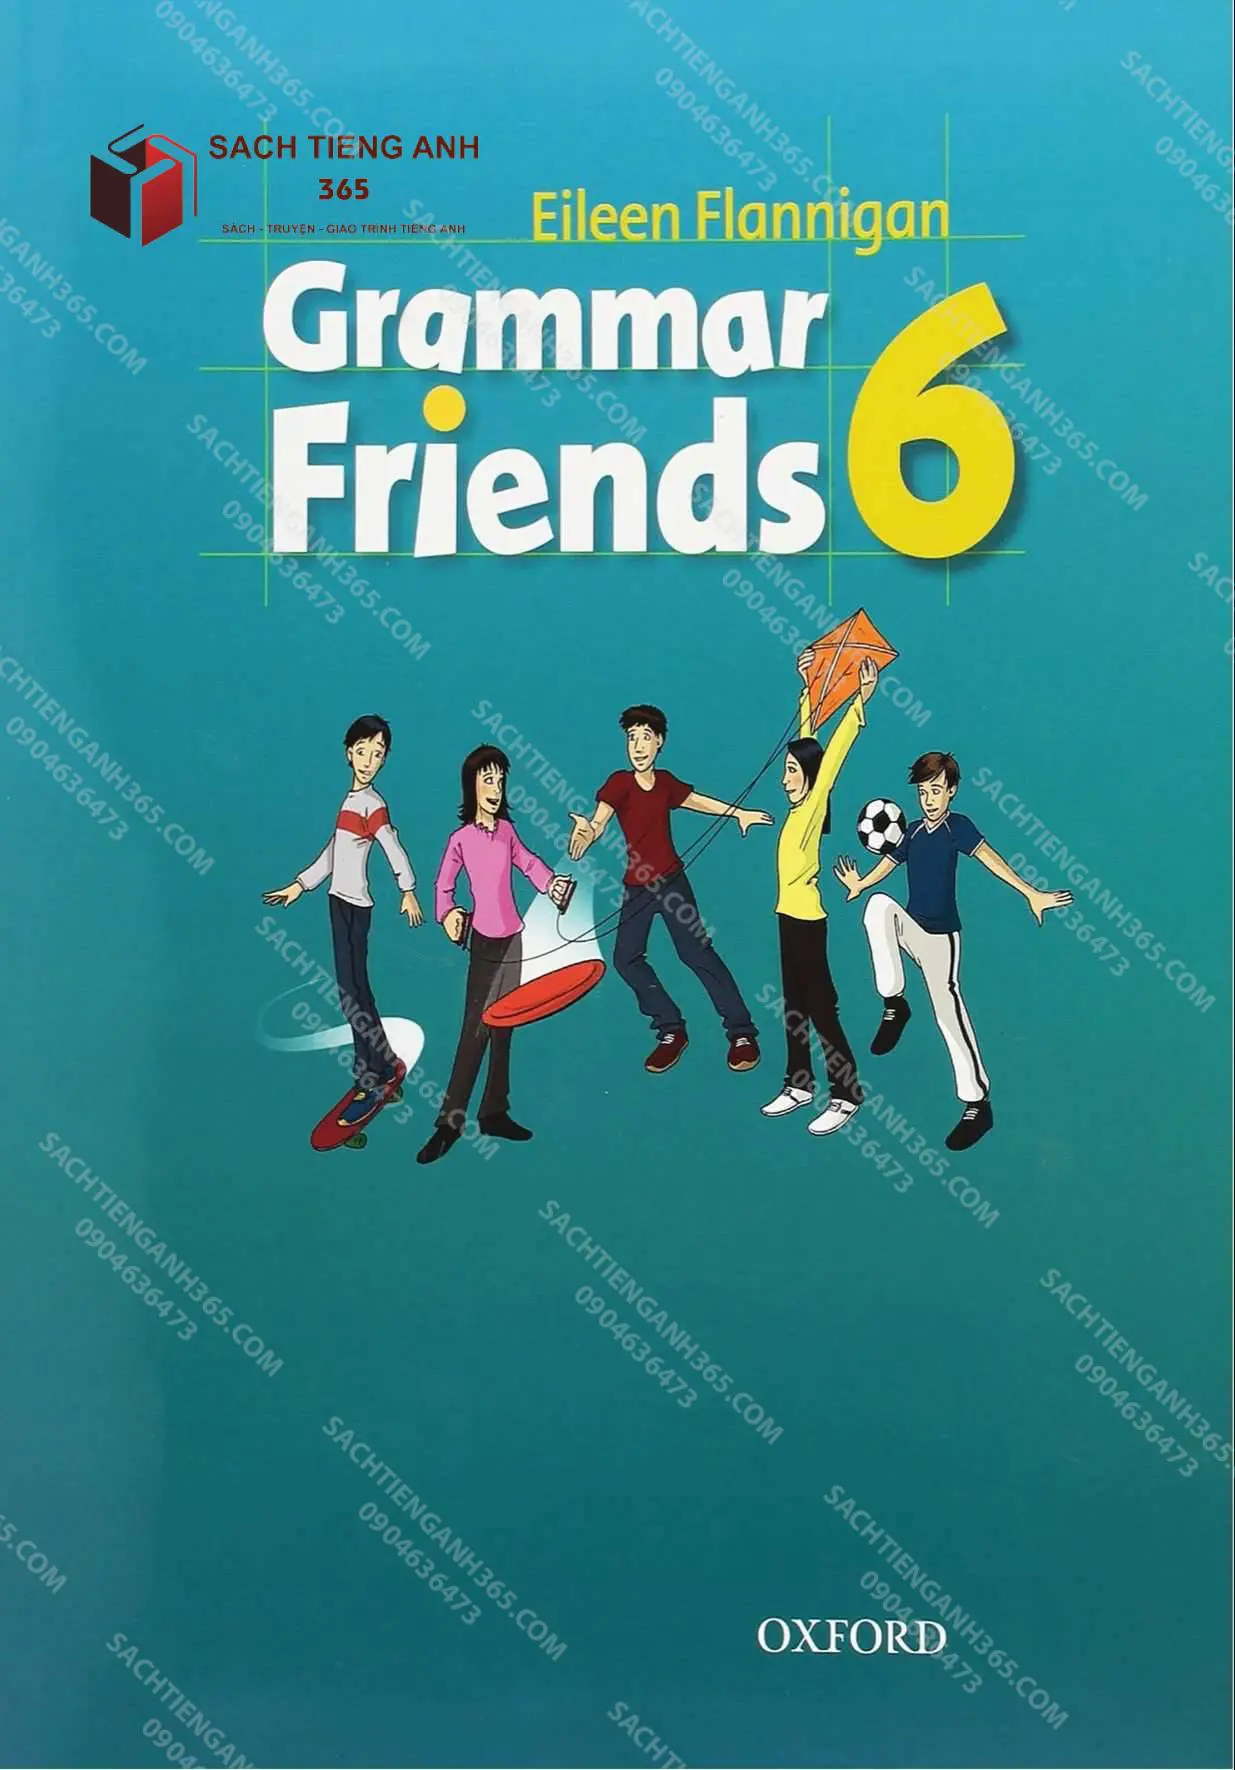 Grammar Friends 6 - Student book